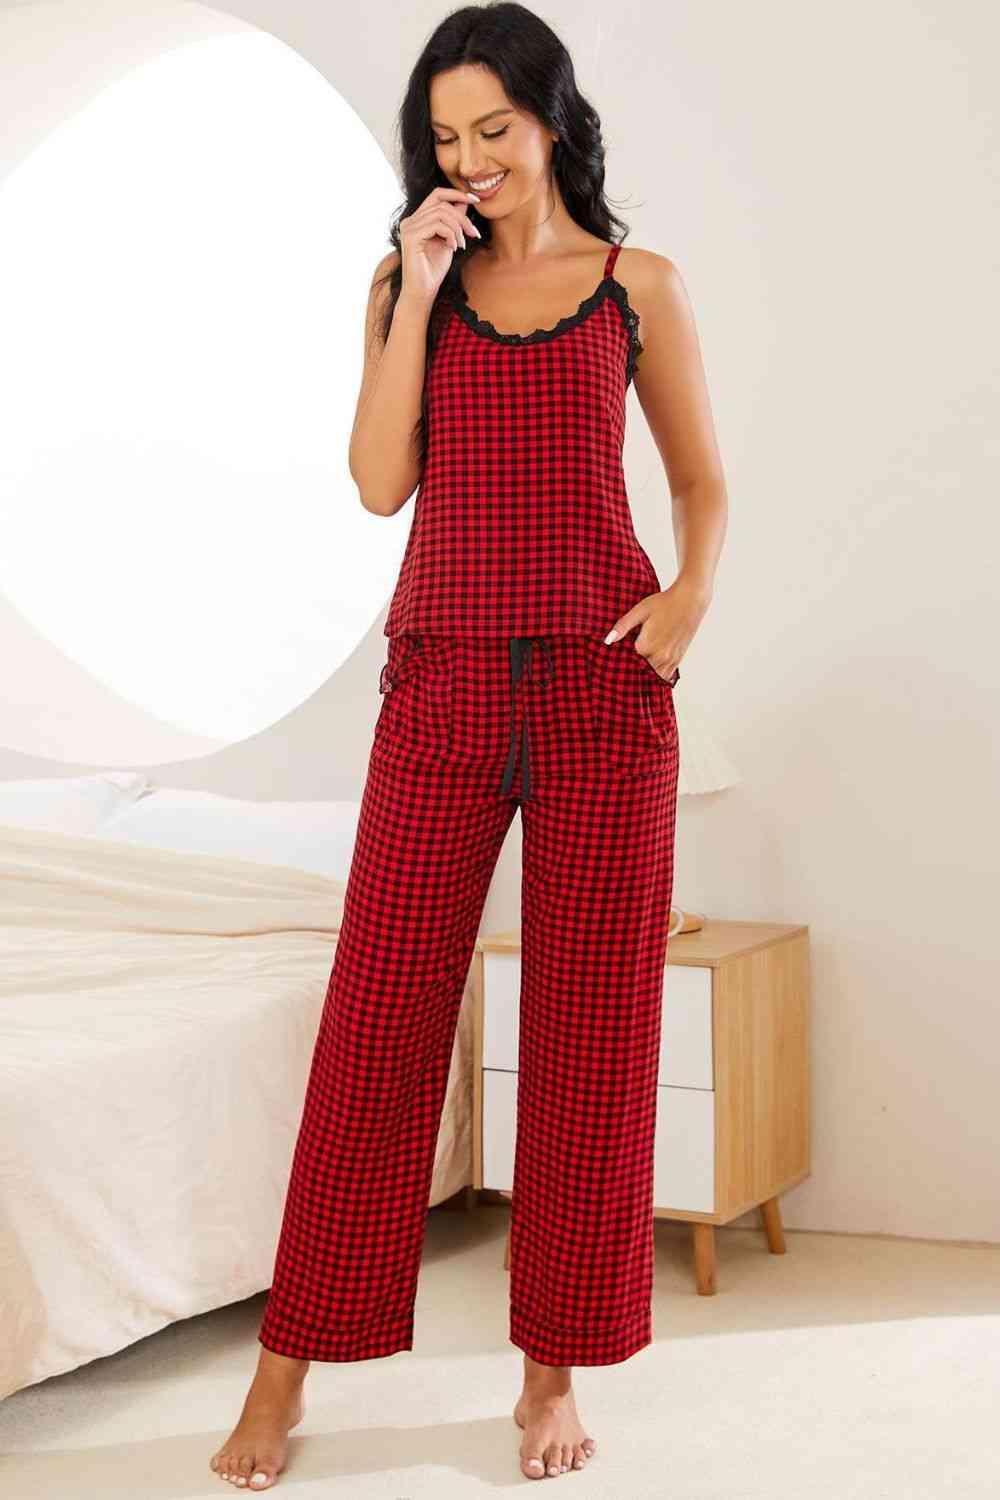 Plaid Lace Trim Cami and Drawstring Pants Pajama Set Loungewear Krazy Heart Designs Boutique   